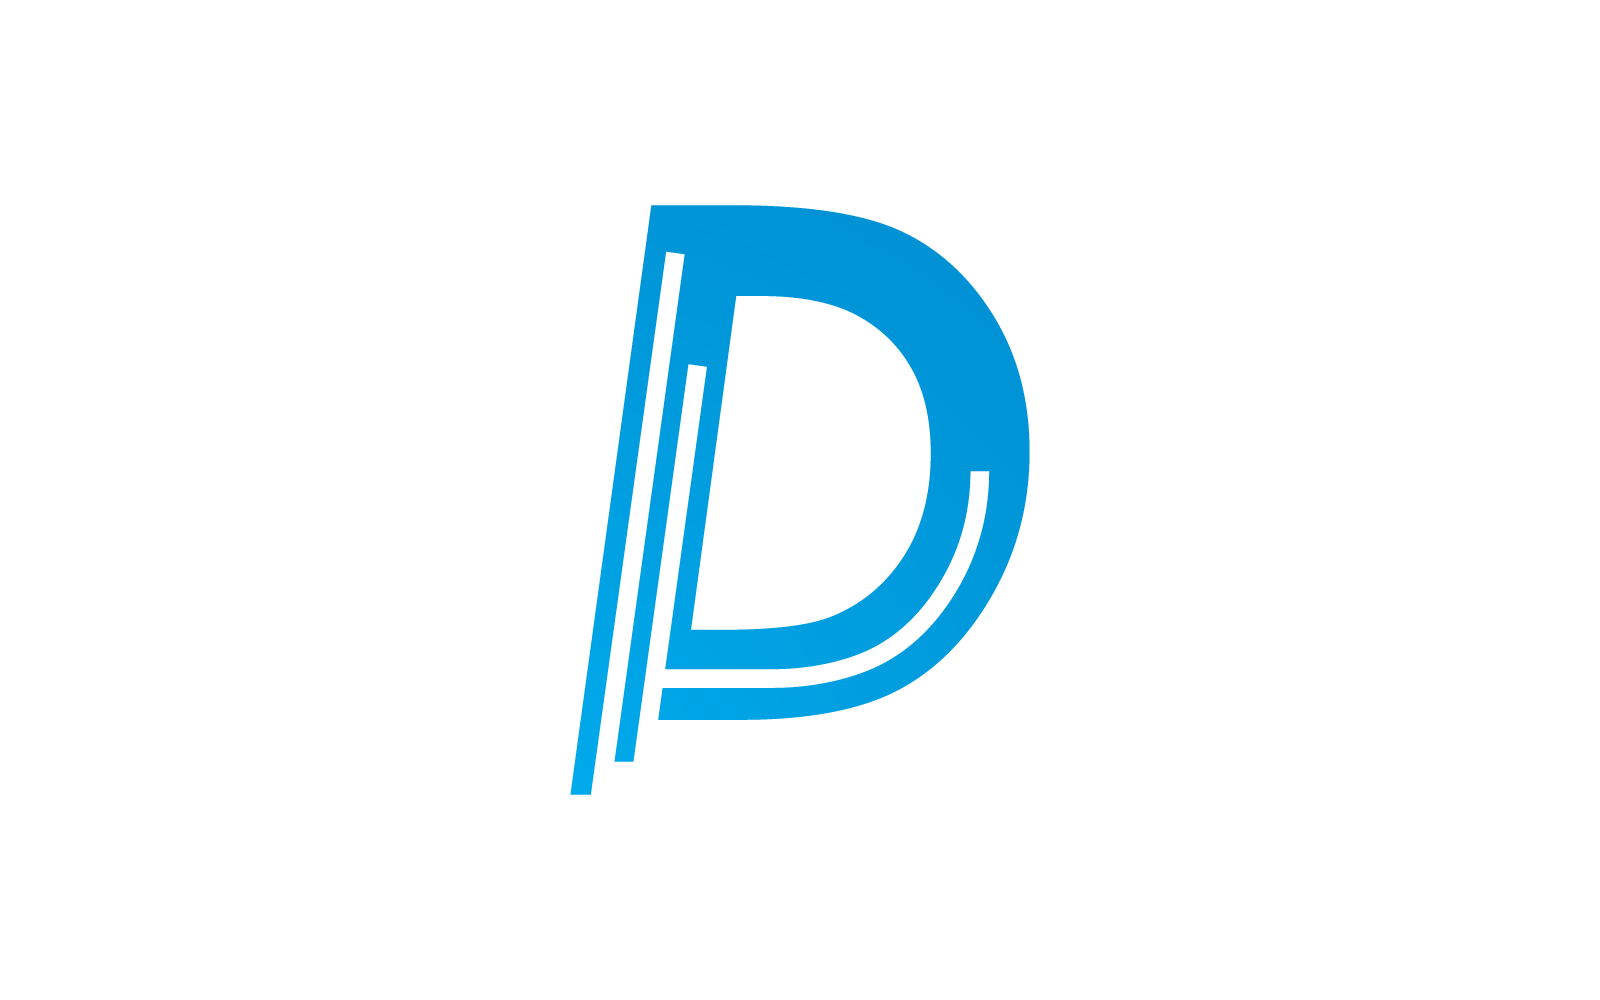 D Initial letter alphabet font logo vector design Logo Template